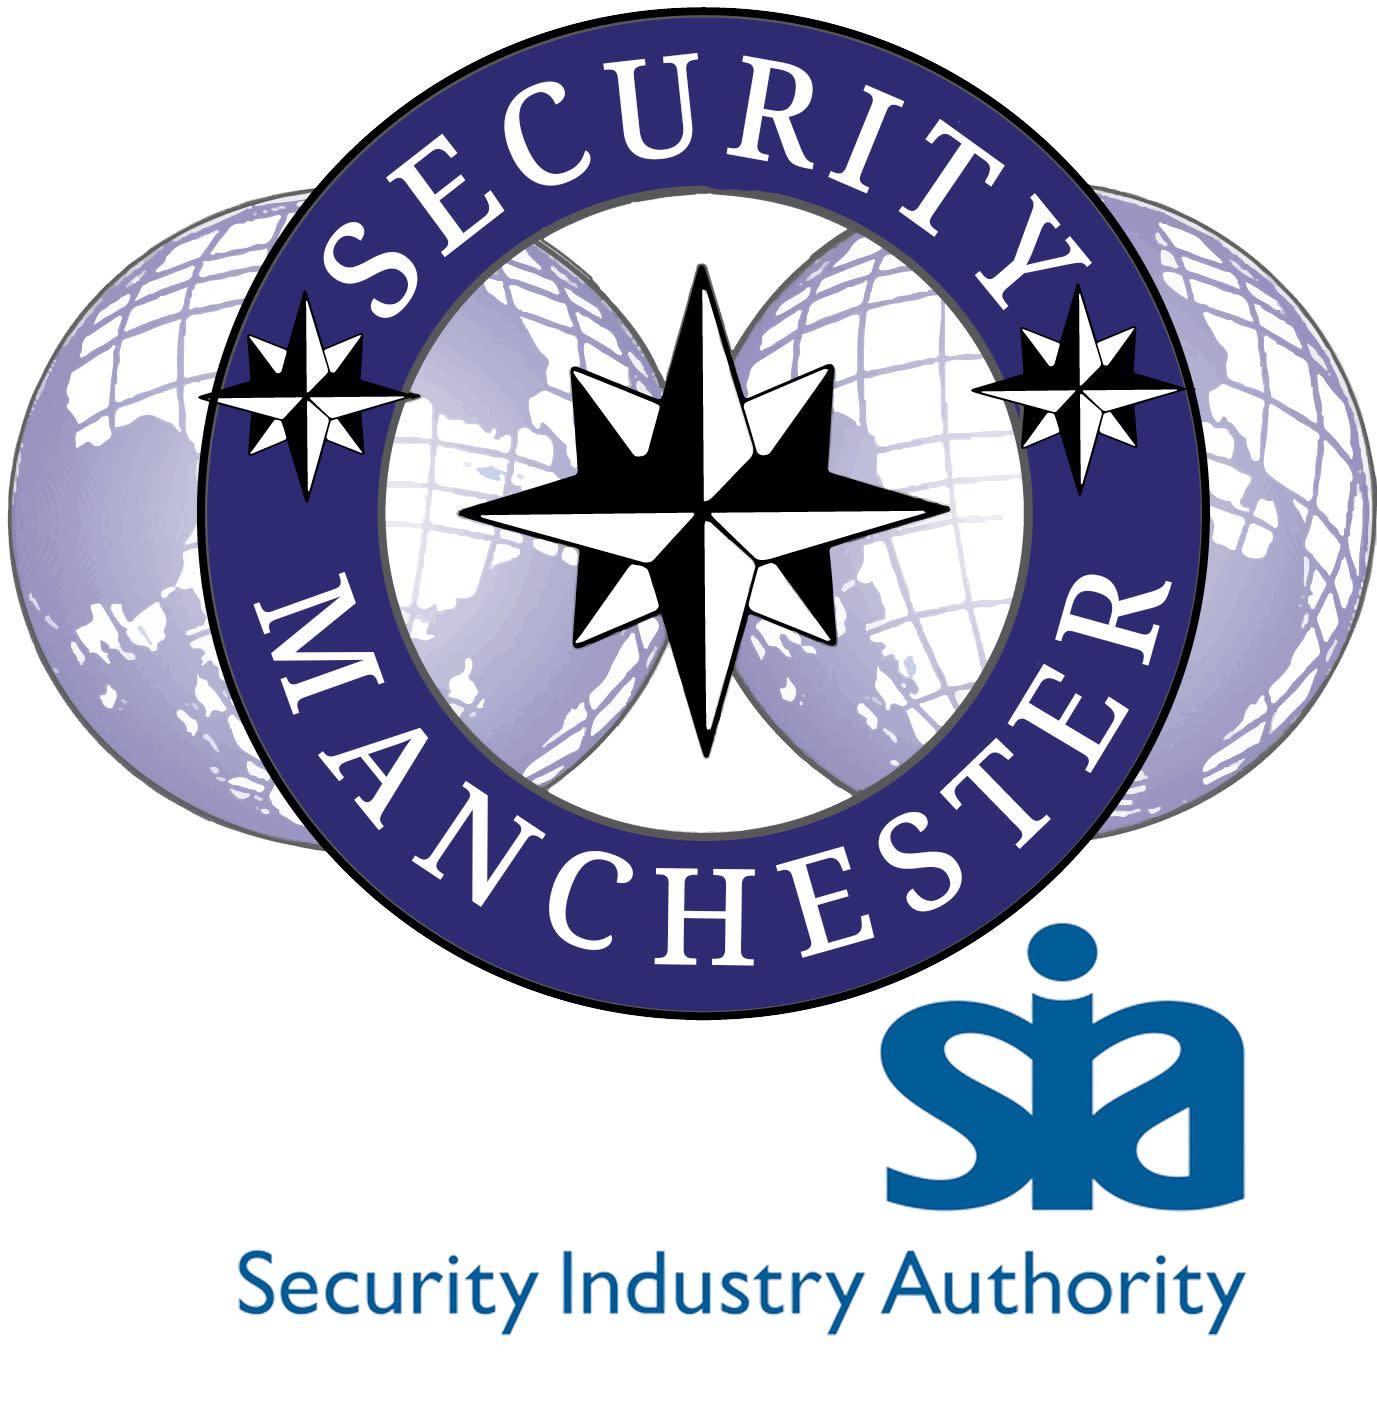 Images Leisure Guard Security (UK) Ltd